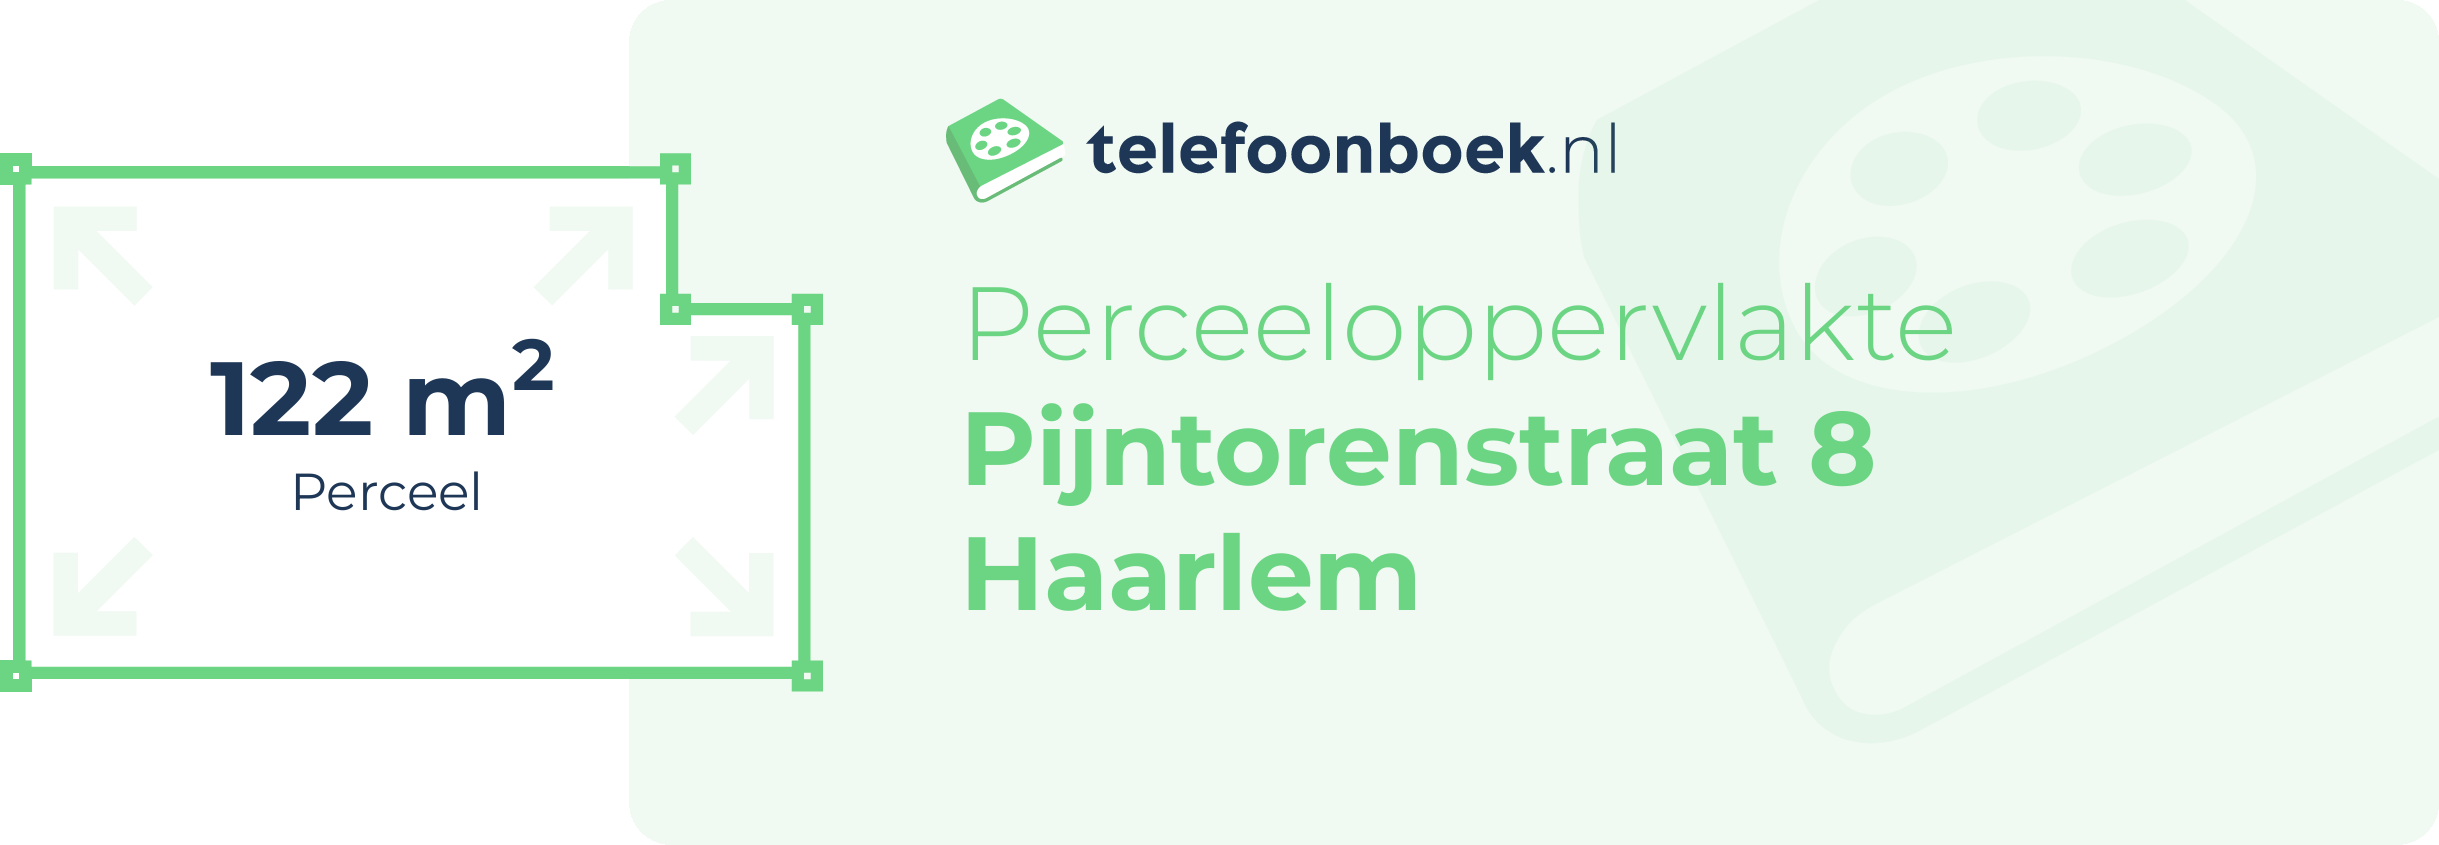 Perceeloppervlakte Pijntorenstraat 8 Haarlem